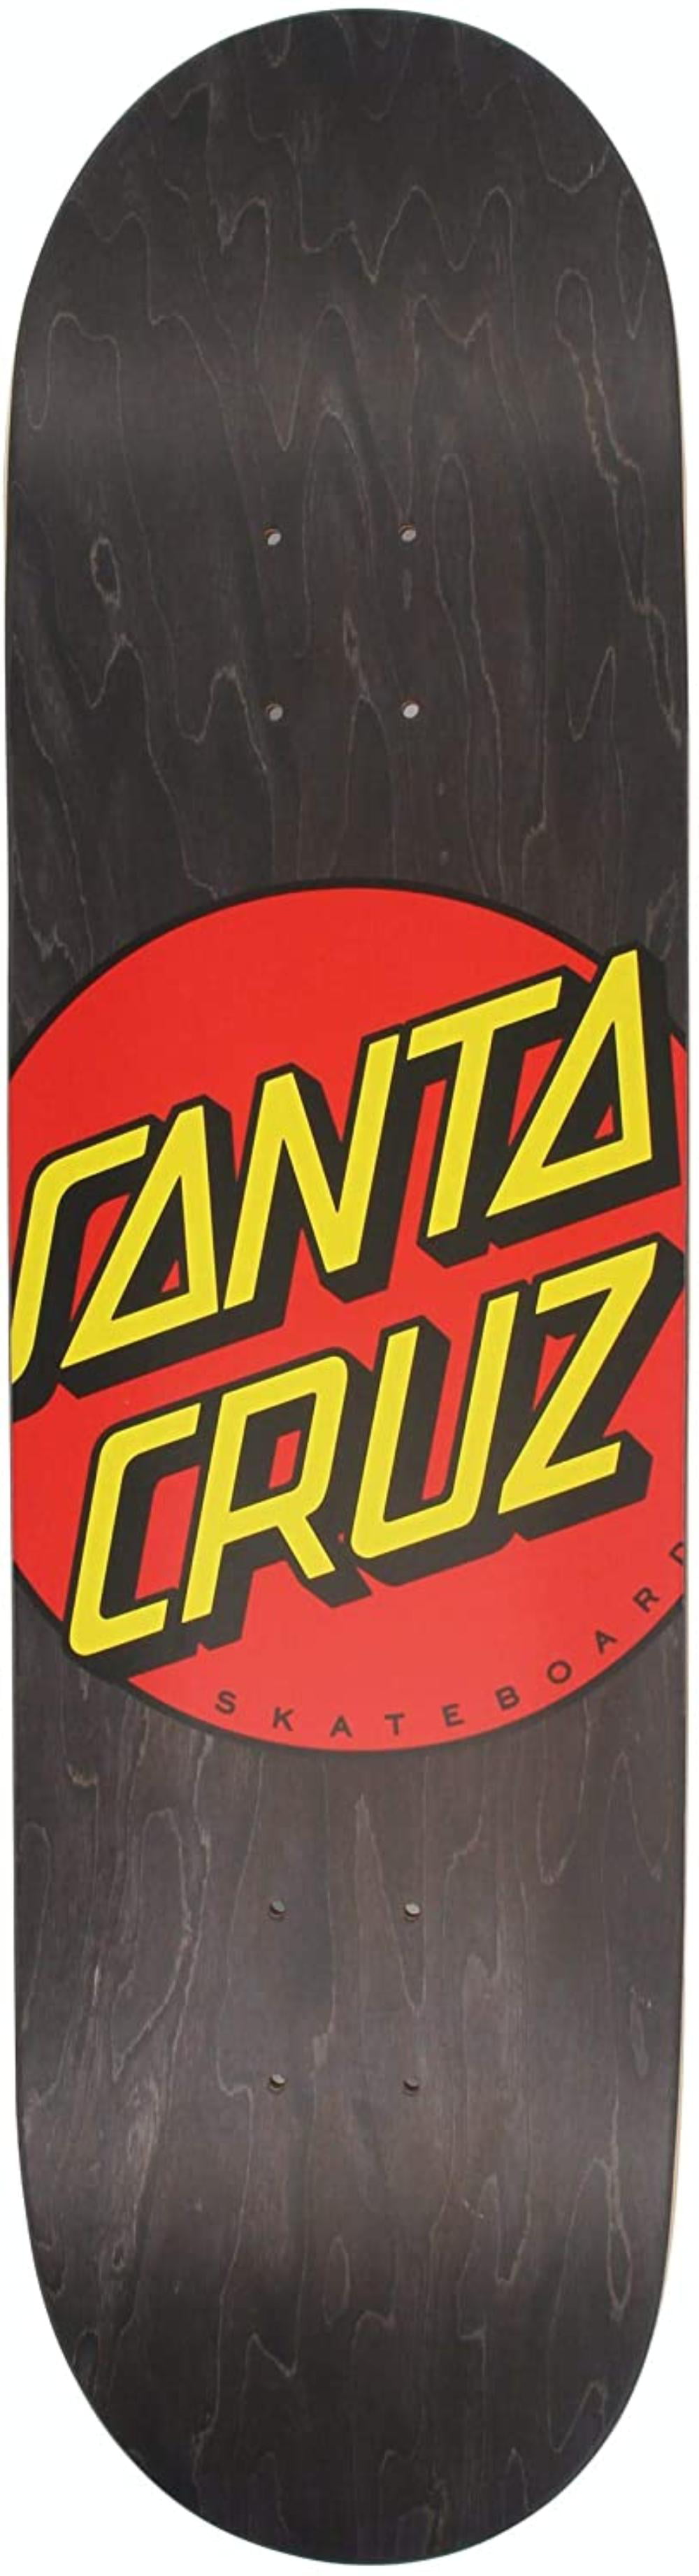 Santa Cruz skateboard deck GORENA 8.0 inch unused item imported from Japan 